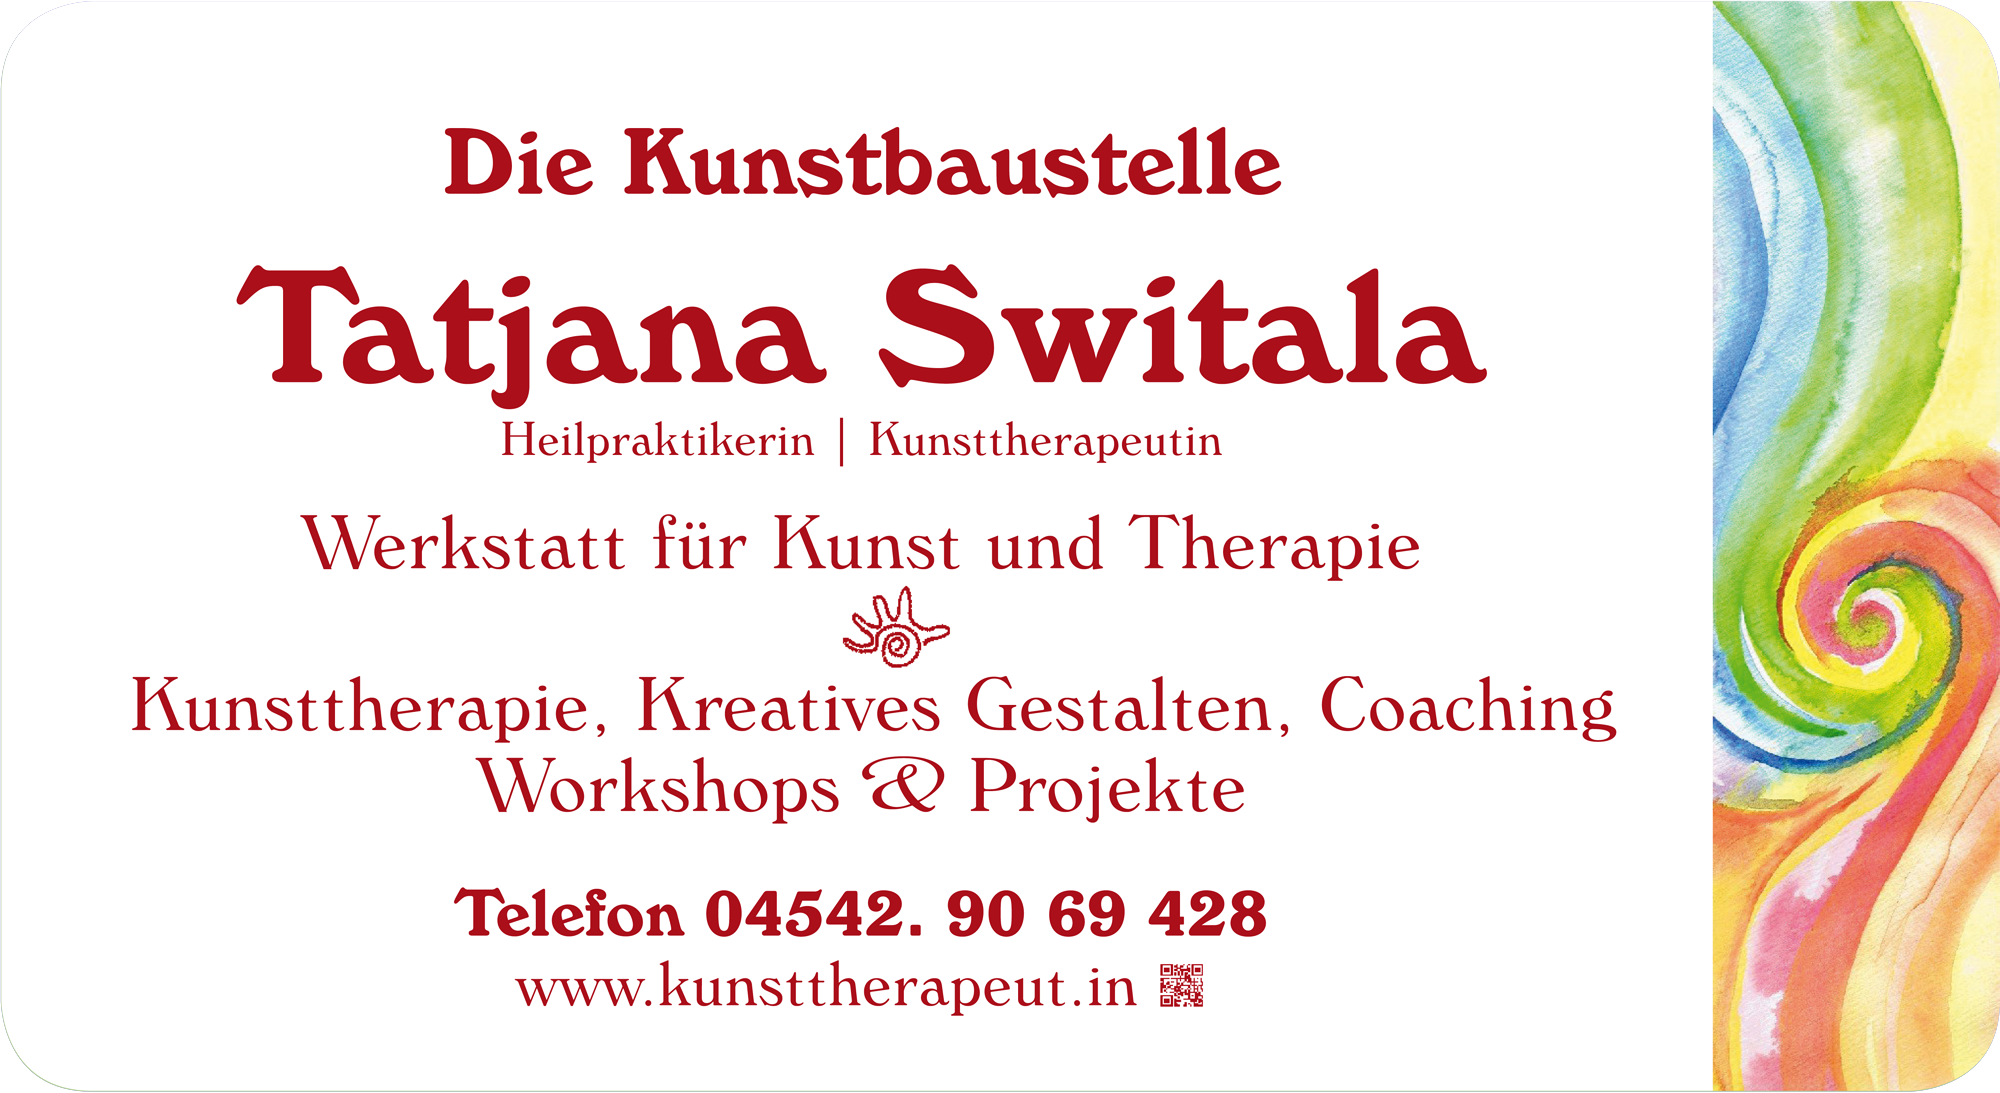 Tatjana Switala - Kunsttherapie - Kreatives Gestalten - Coaching